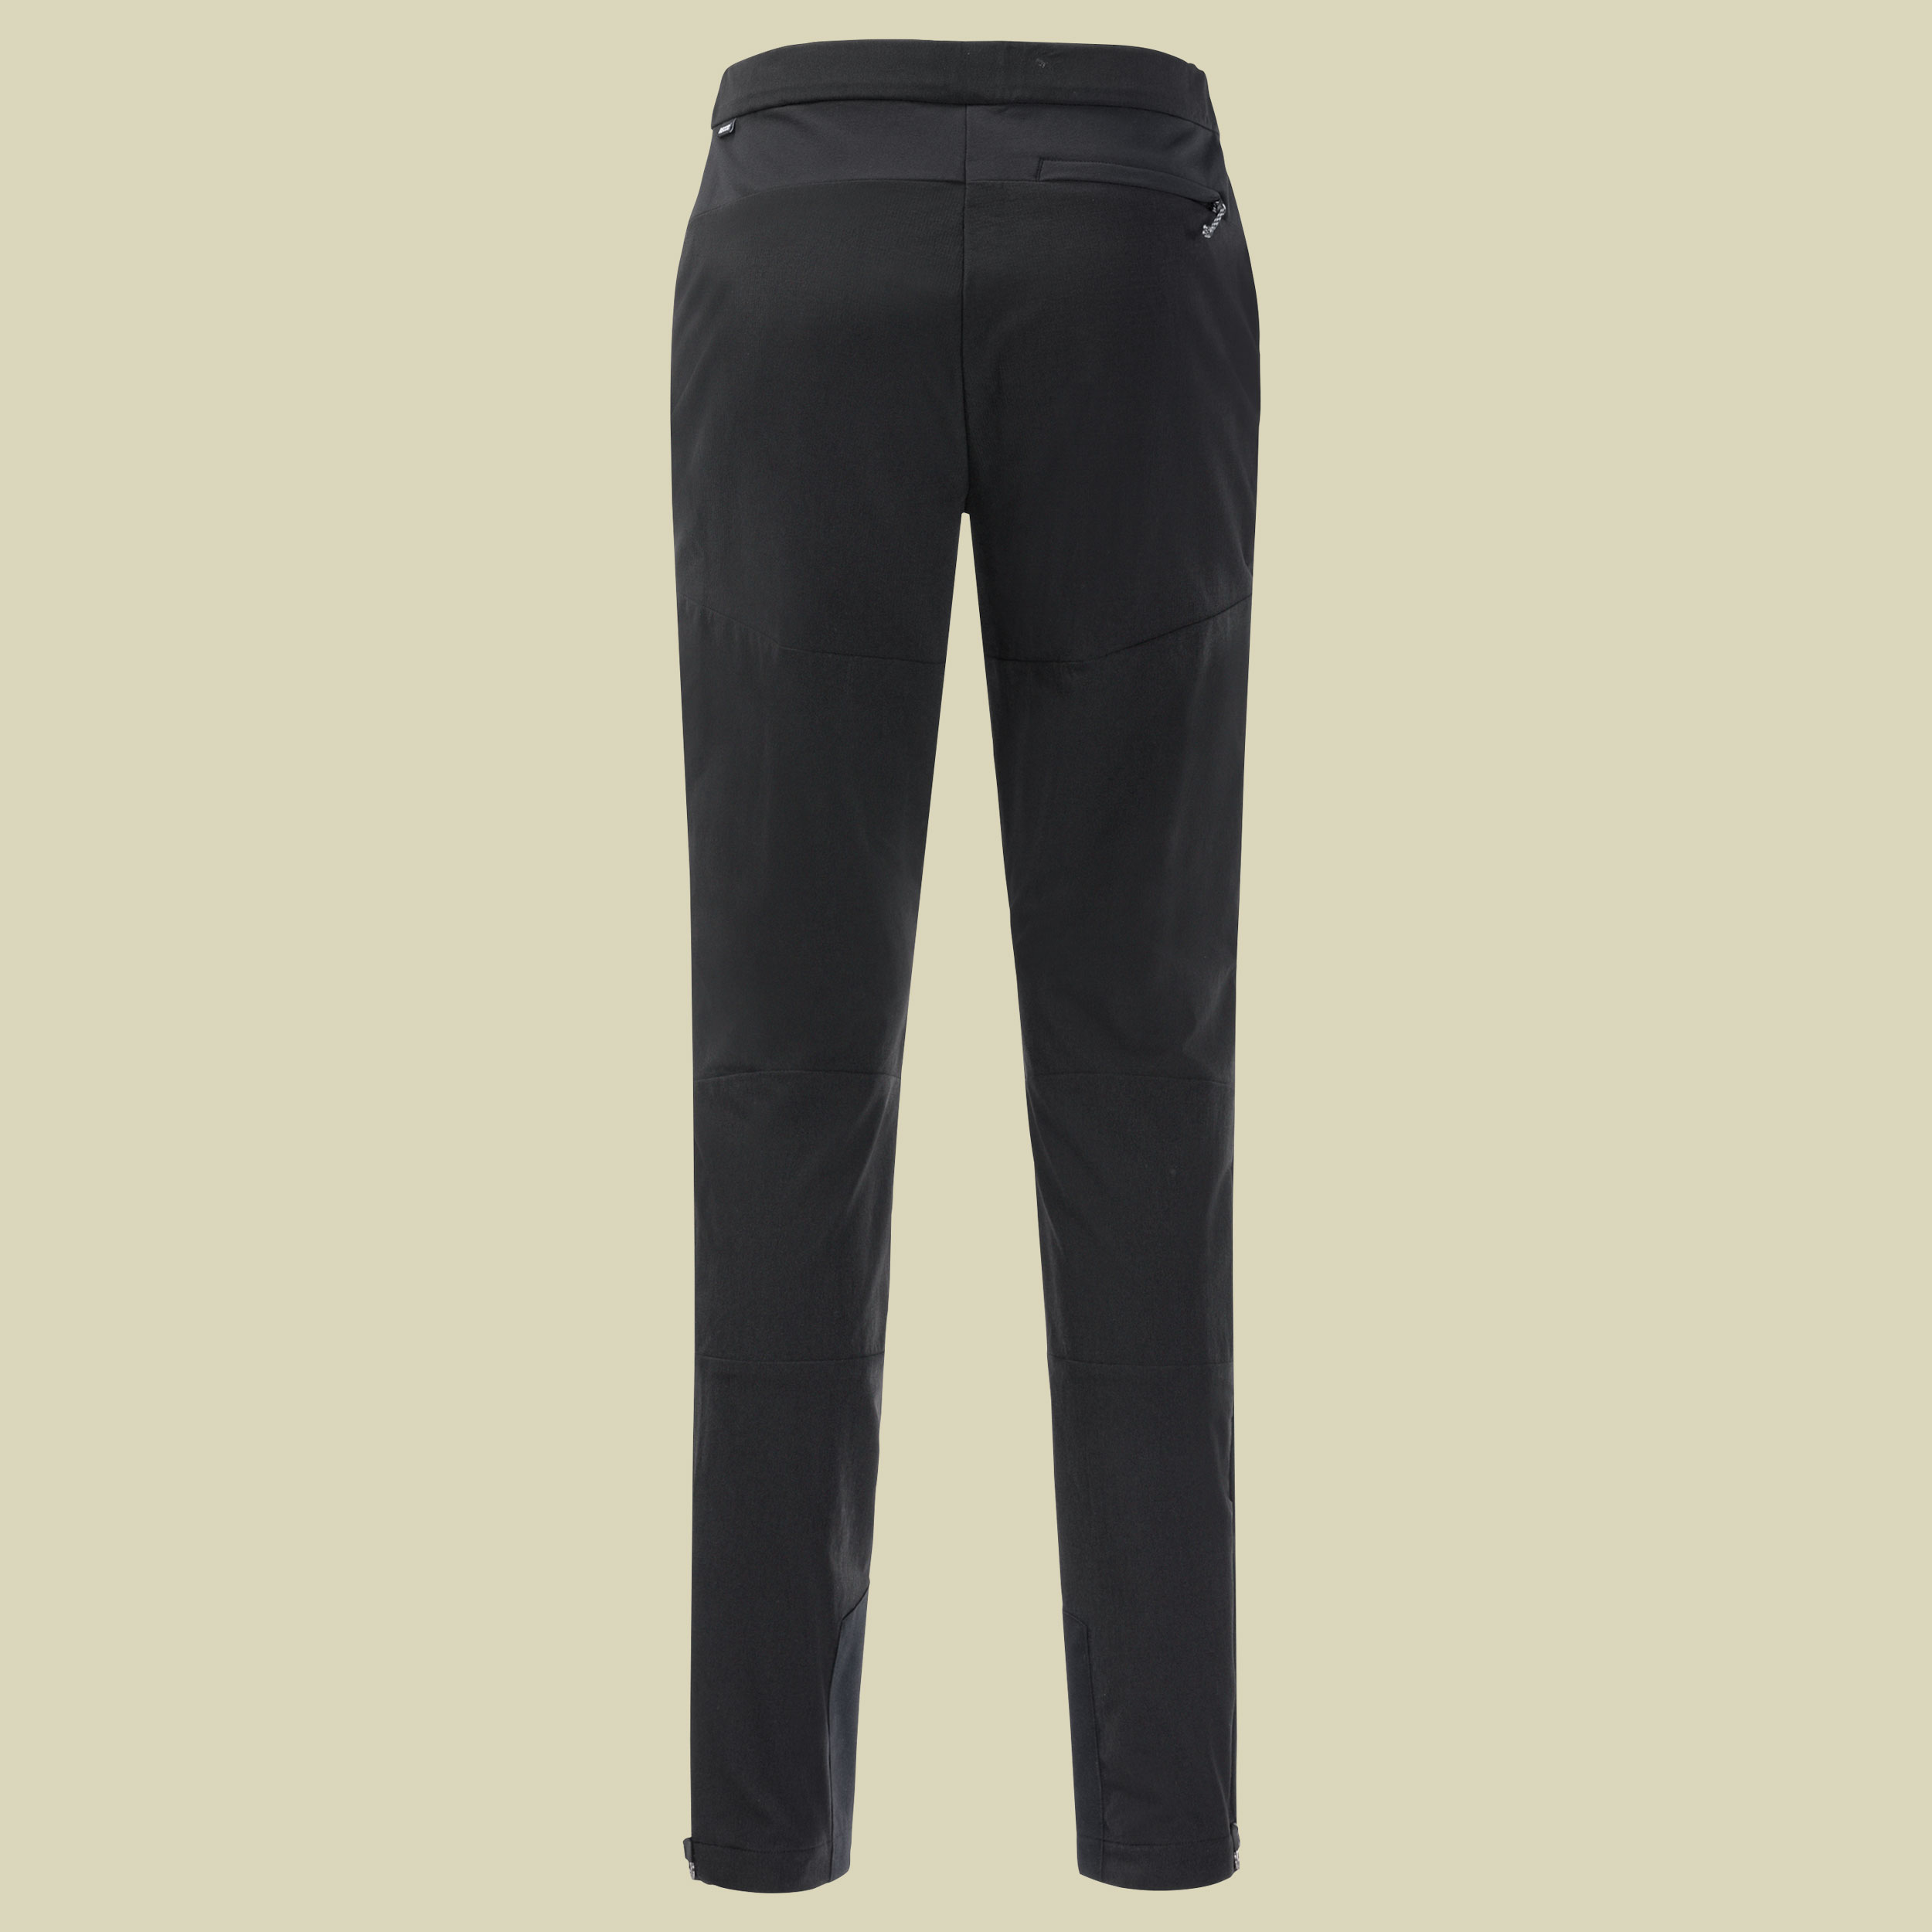 Salmaser Pants Women Größe 44 Farbe black